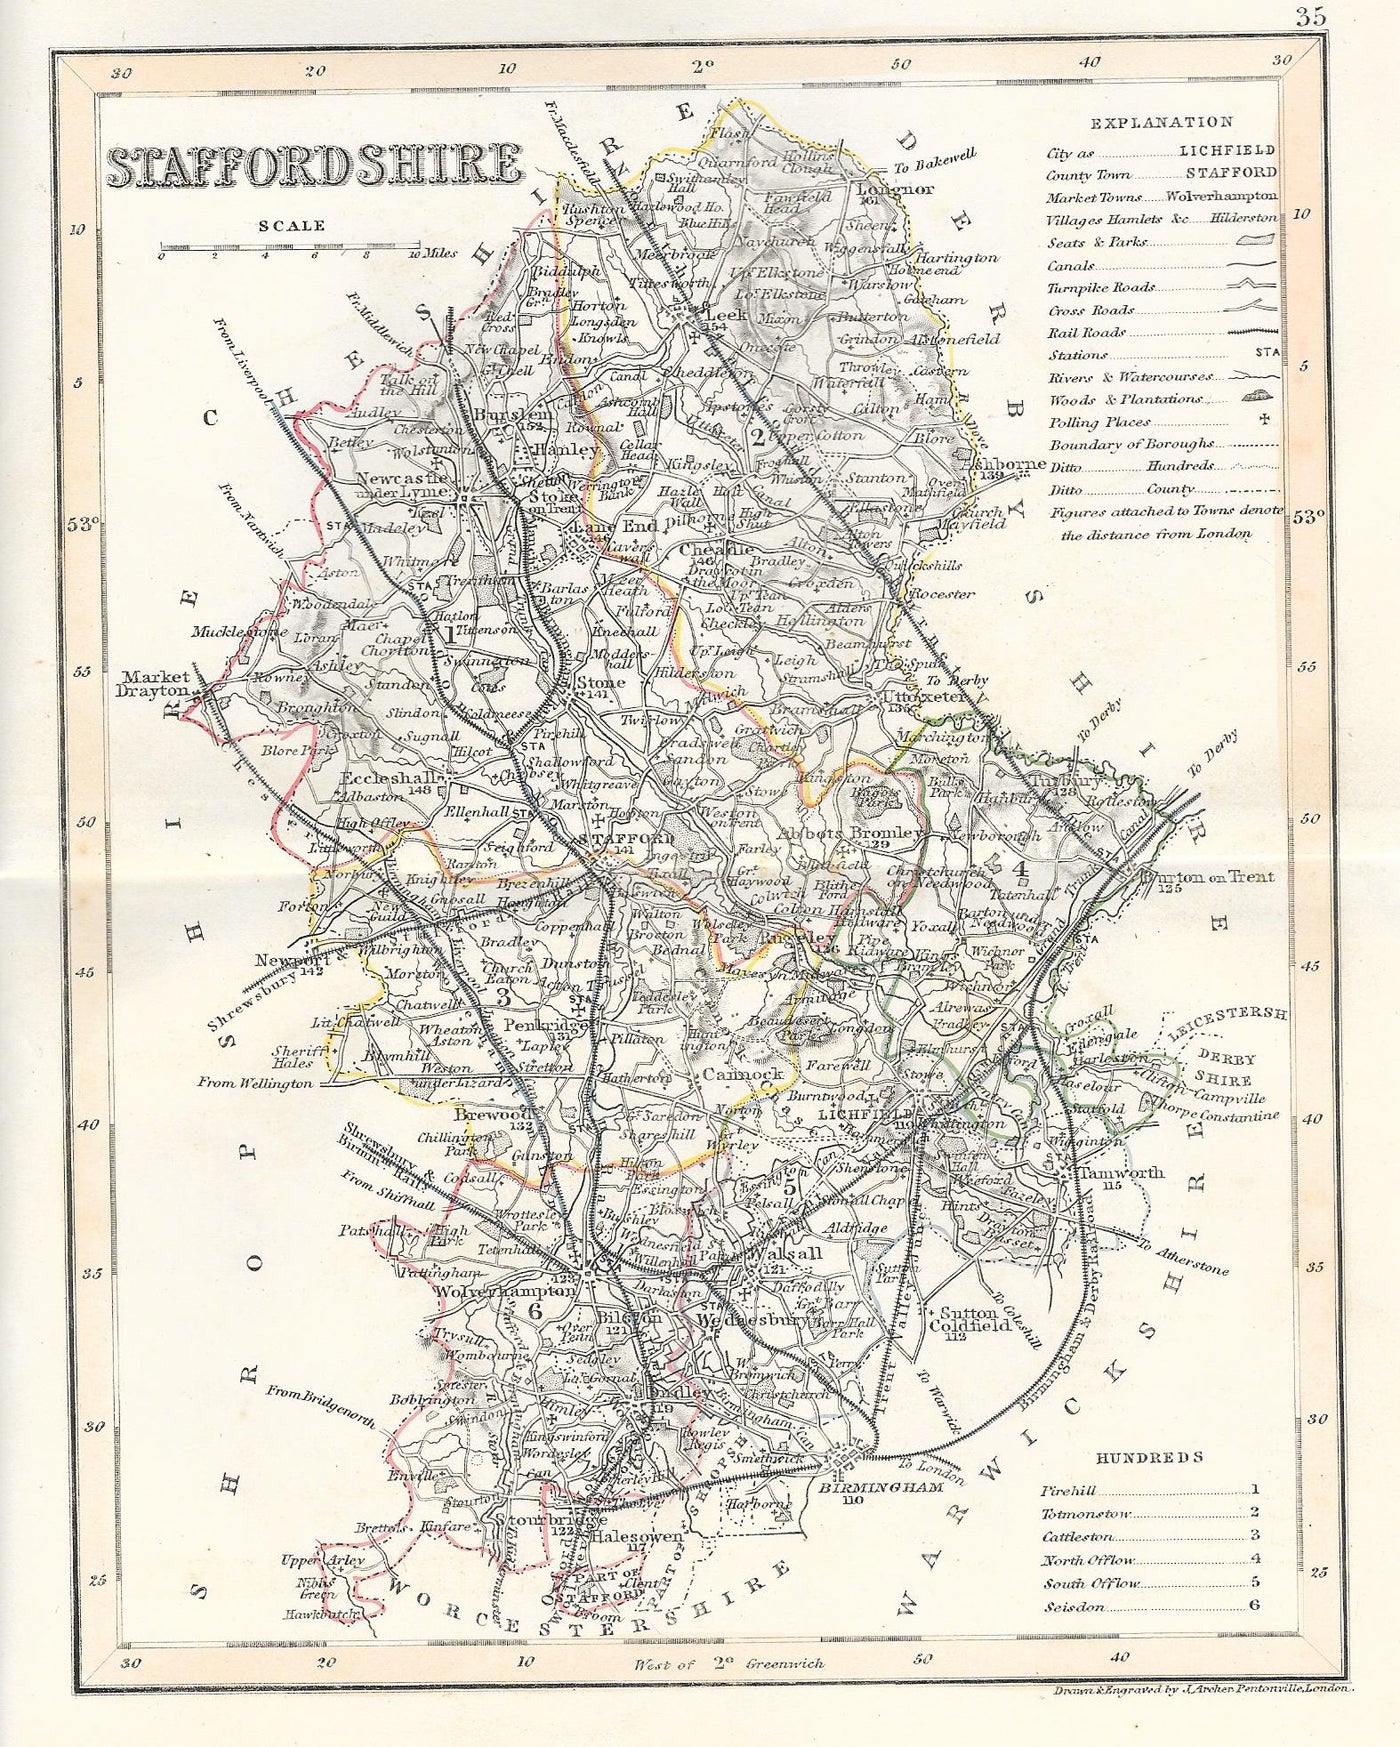 Staffordshire antique map 1845